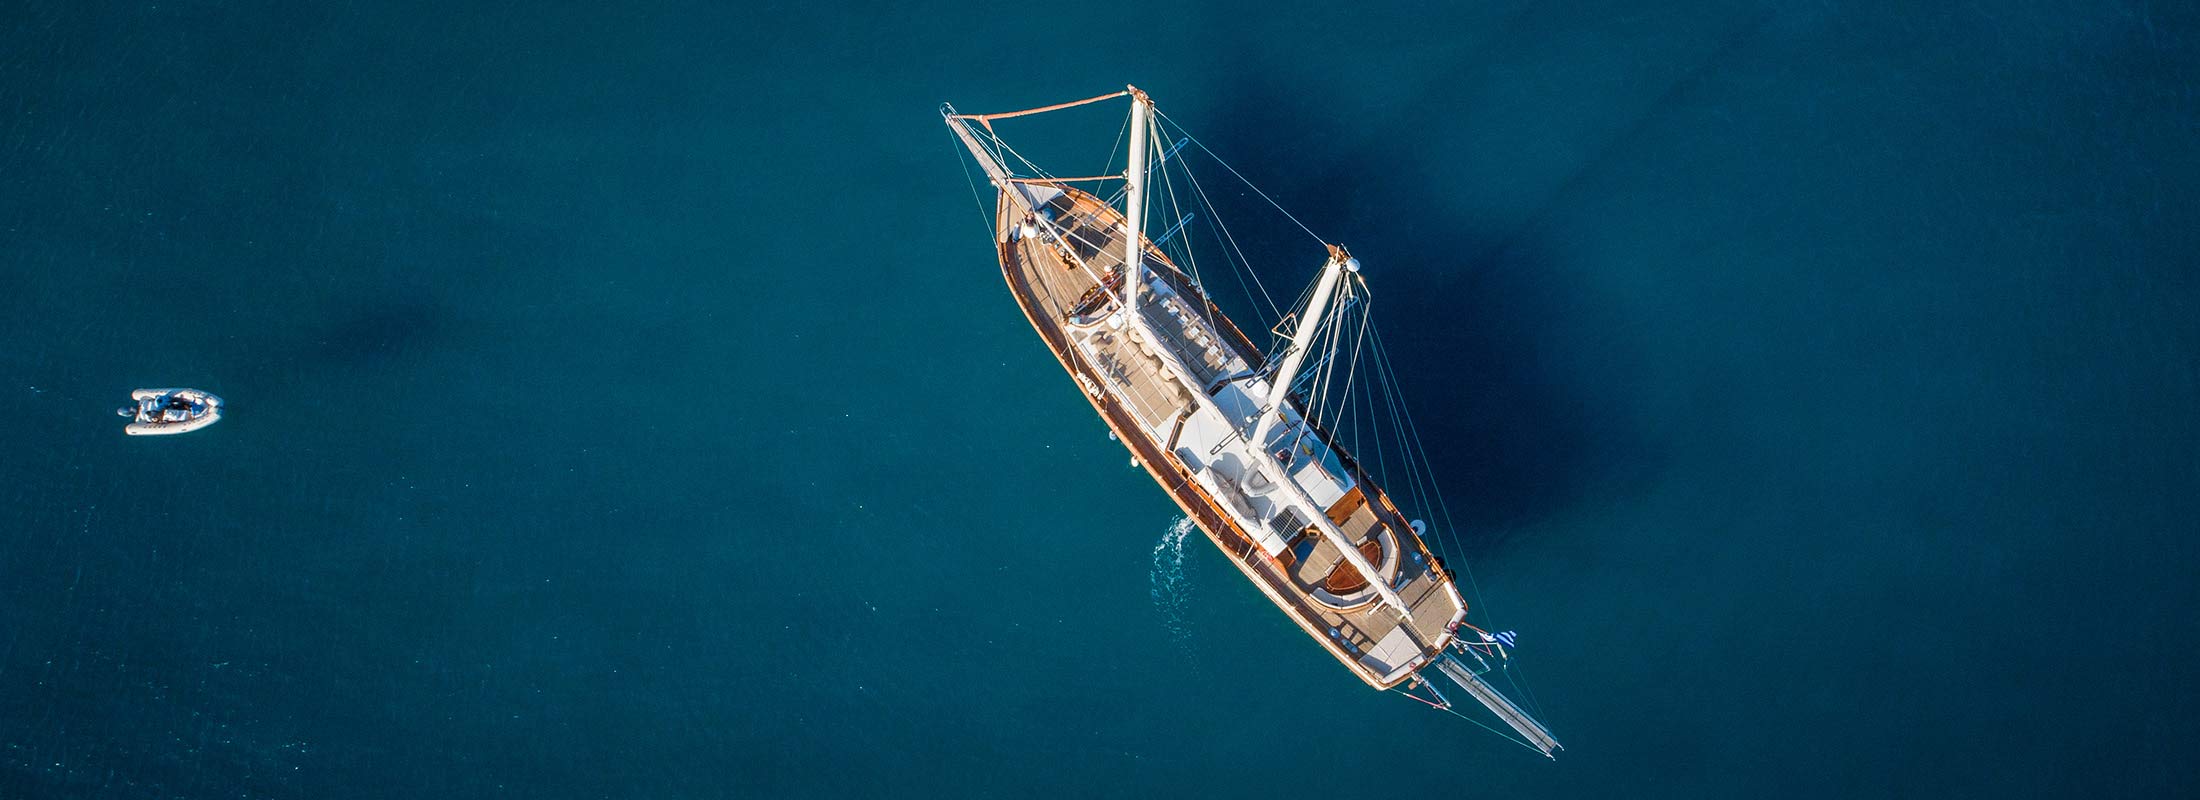 Entre-Cielos-Sailing-Yacht-for-Charter-Mediterranean-slider-2.jpg